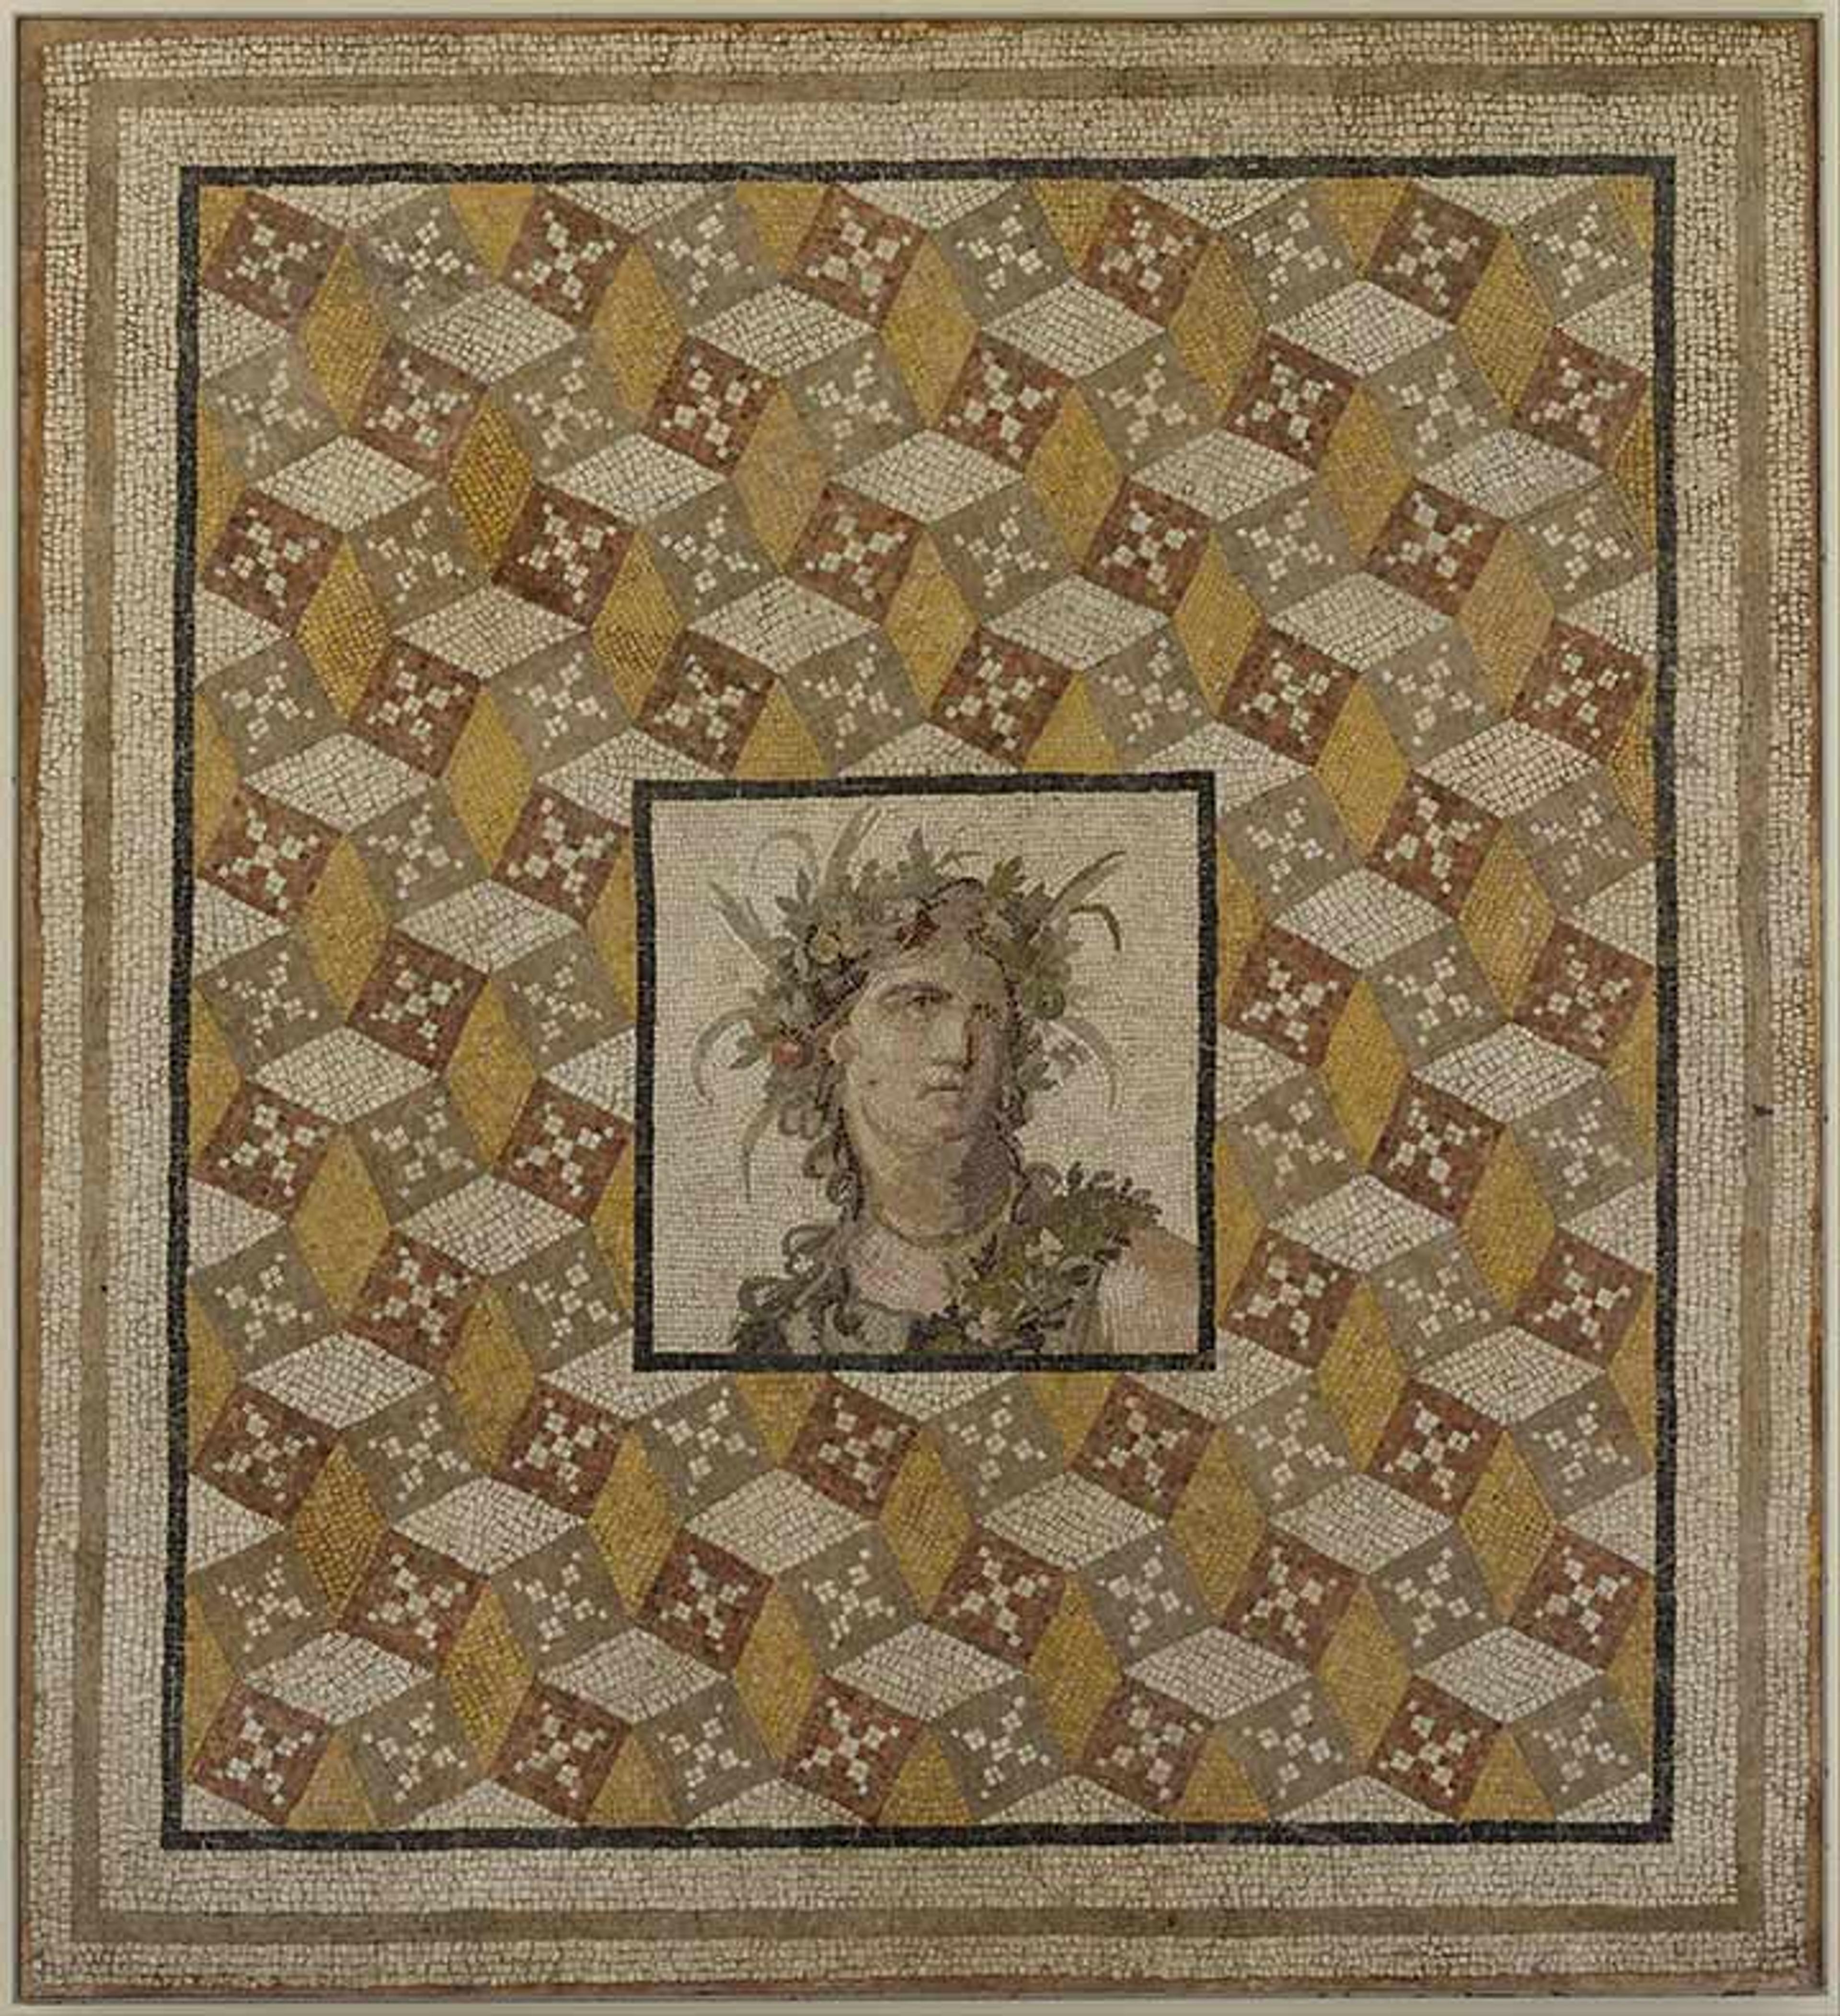 Roman mosaic floor panel